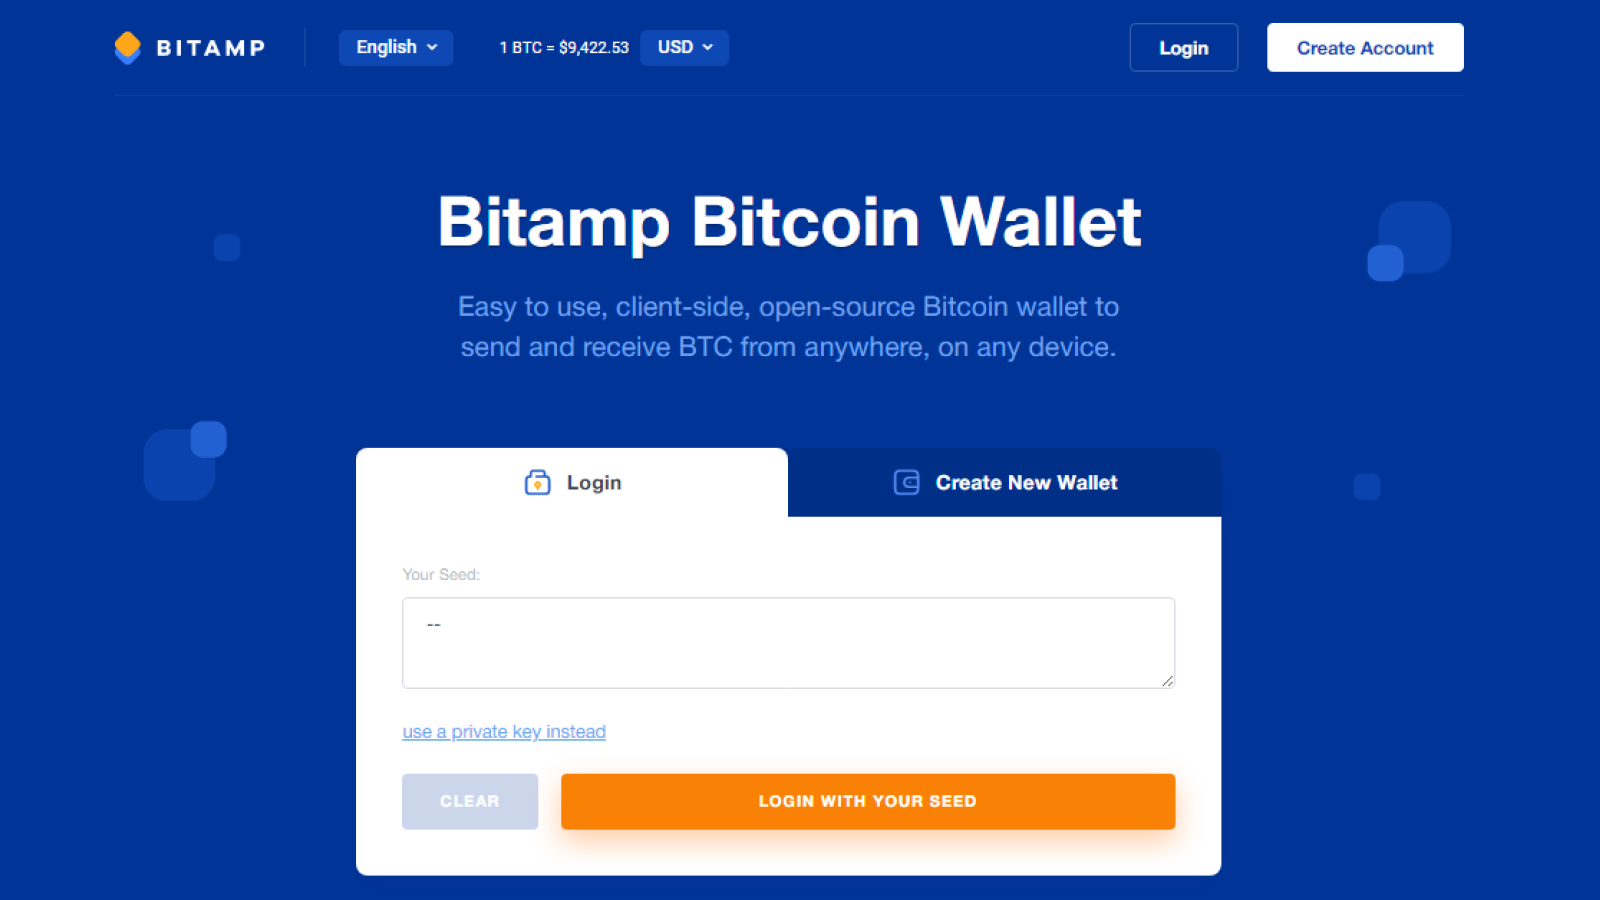 Bitamp client-side Bitcoin (BTC) wallet